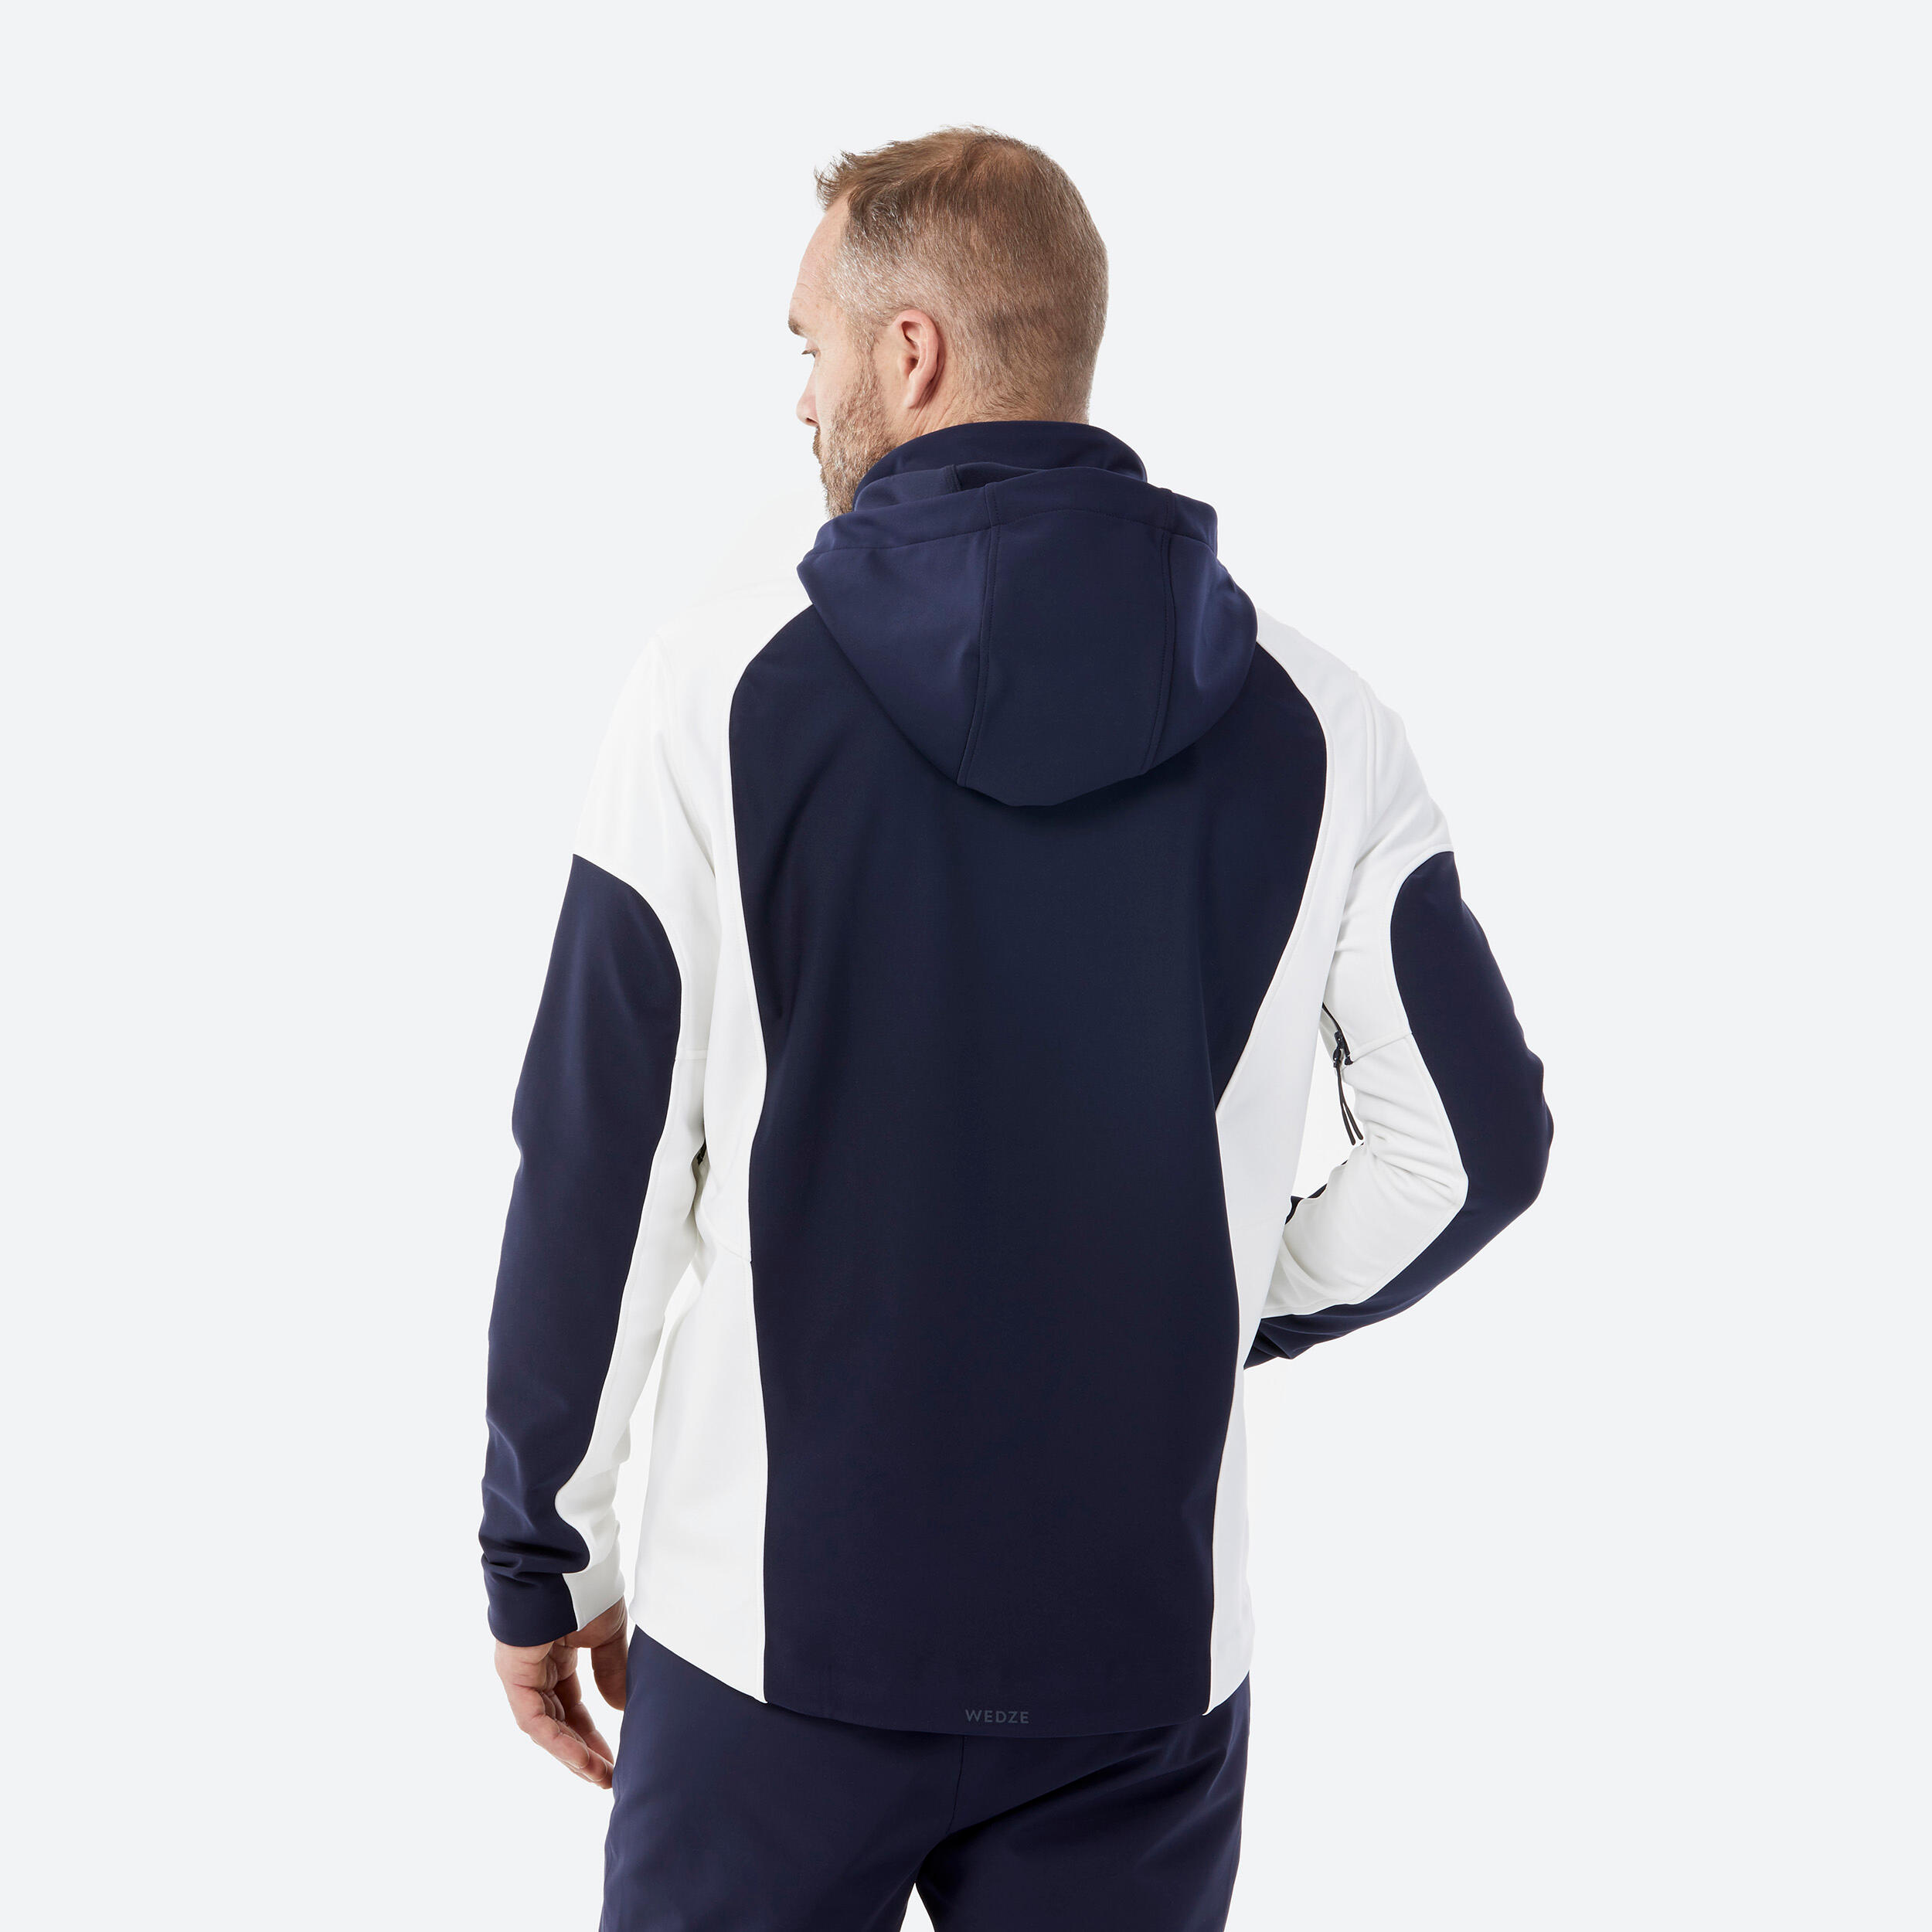 Men's lightweight waterproof ski jacket - Dark and light blue, white 3/7